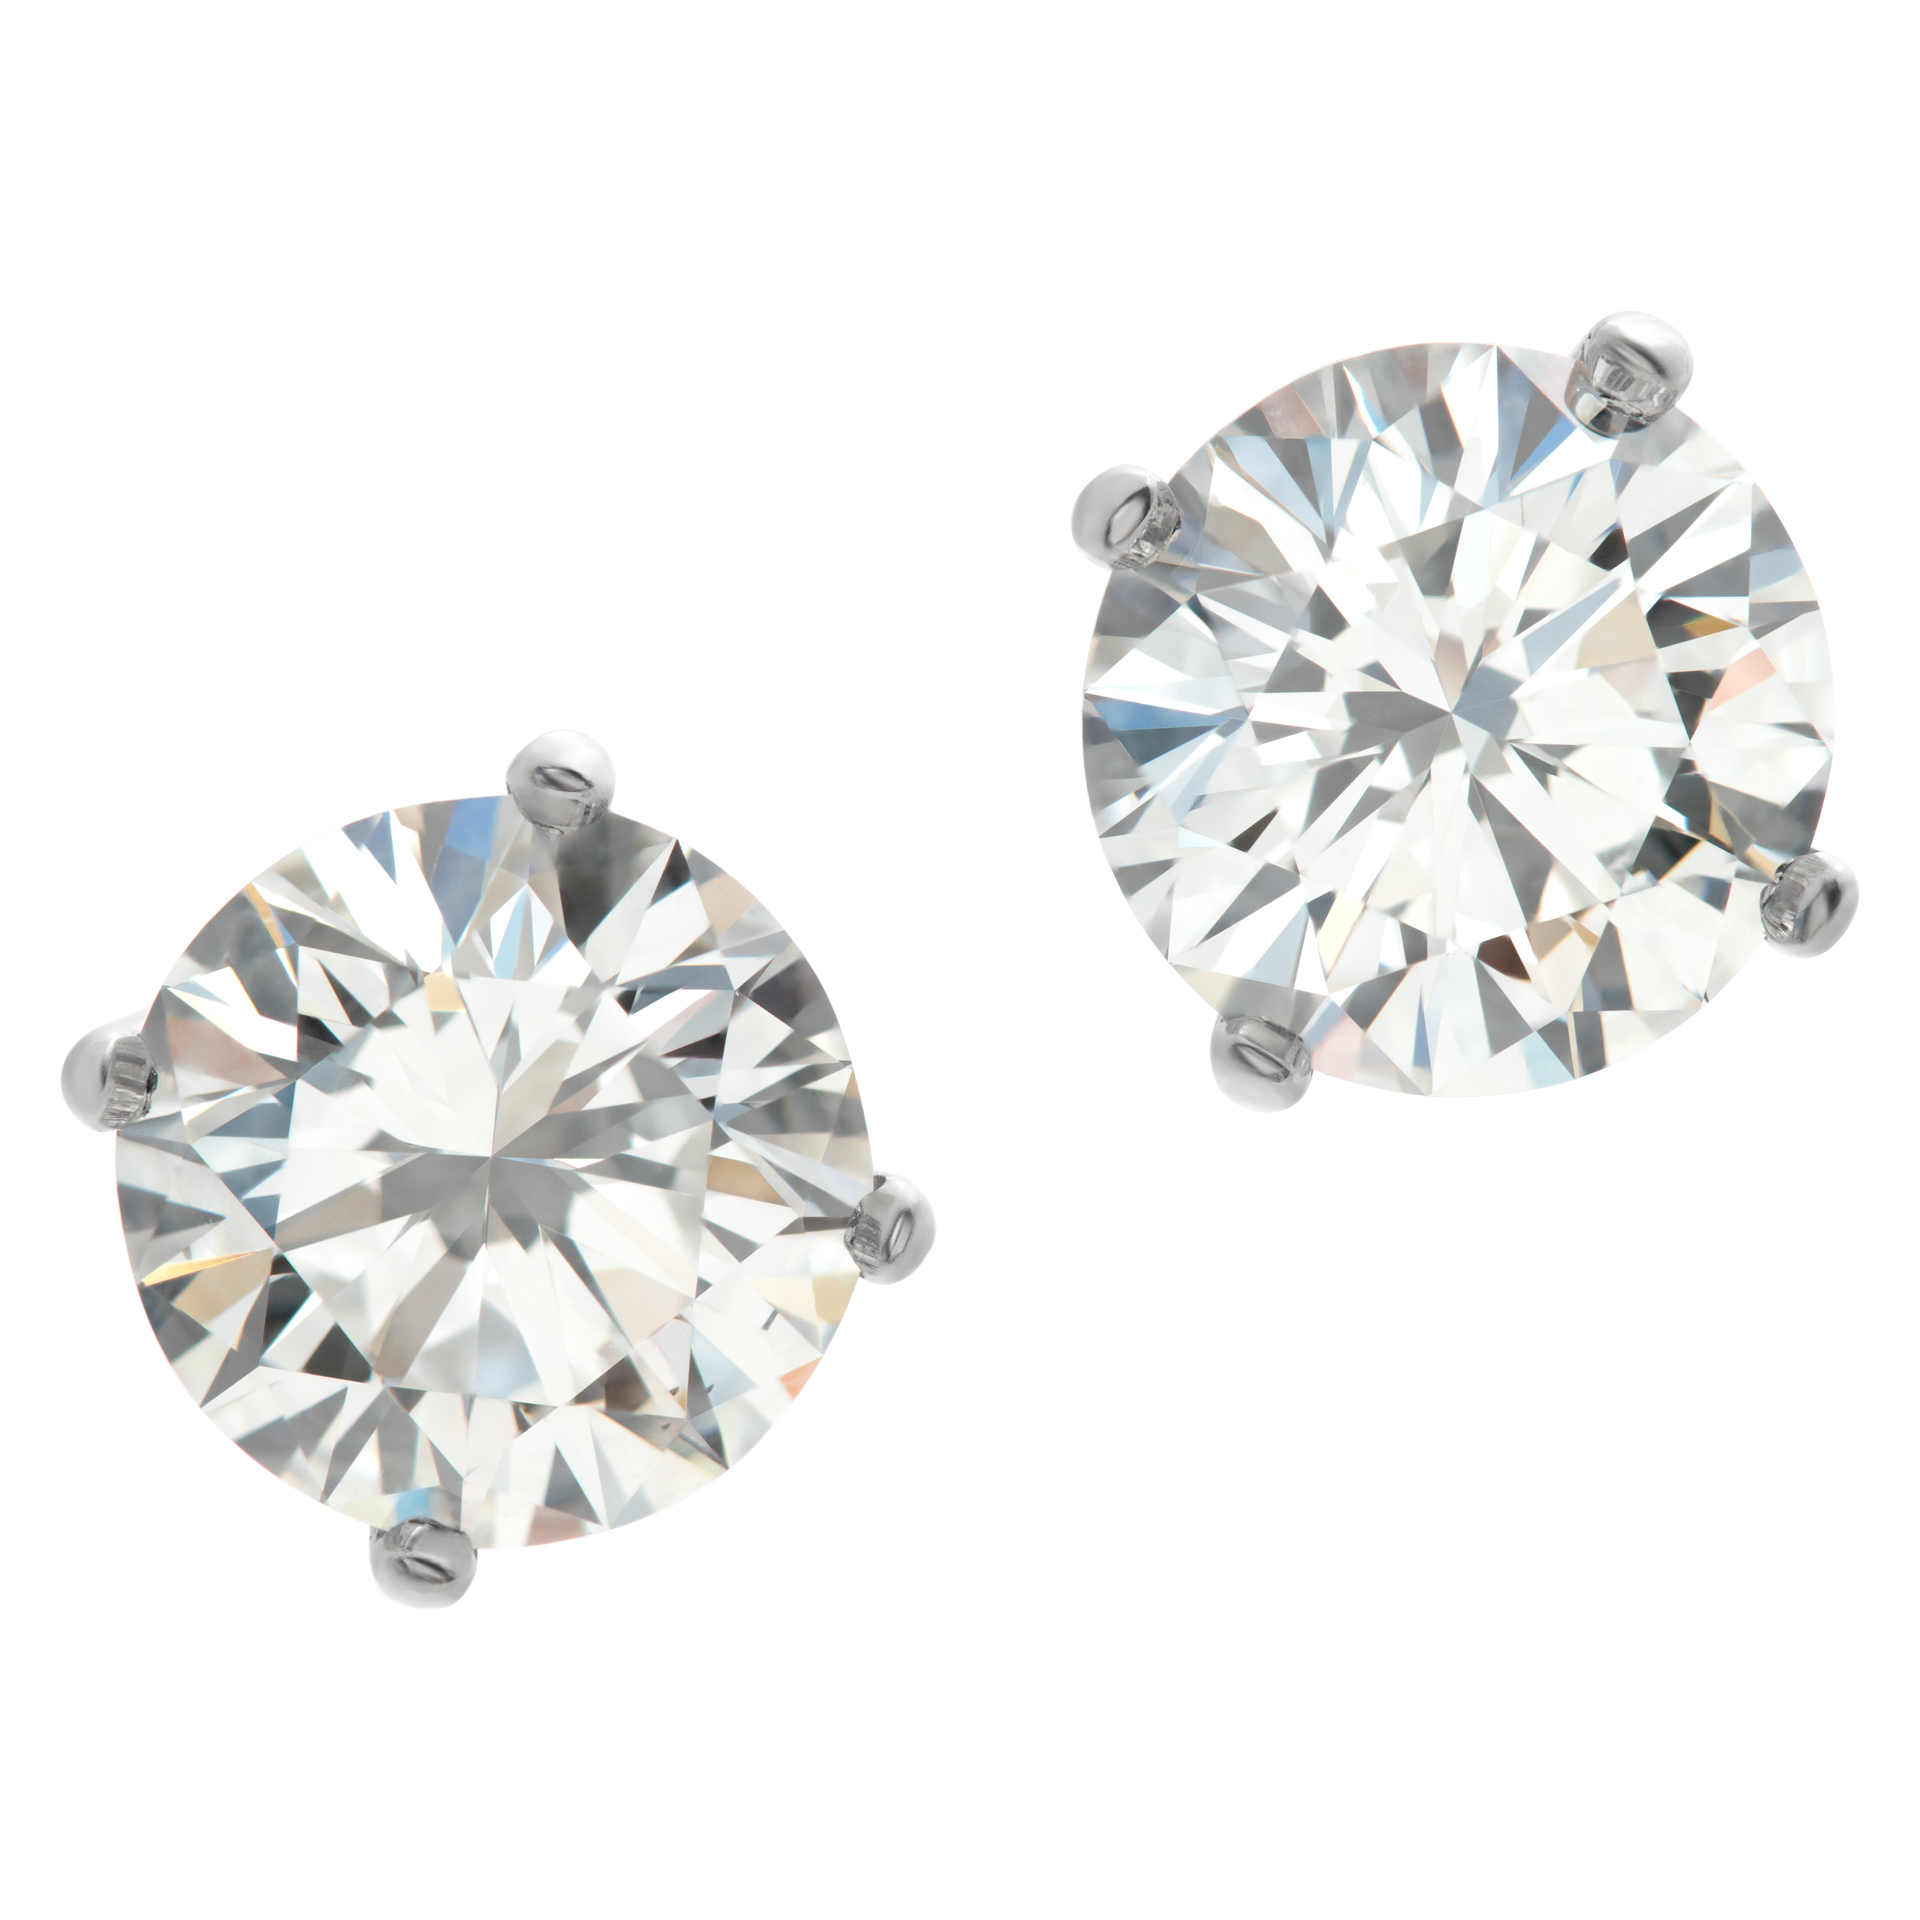 Tiffany & Co. platinum diamond studs earrings with round brilliant cut diamonds 1.66 carat (F color, VVS1 clarity) & 1.63 carat (F color, VVS1 clarity) image 1